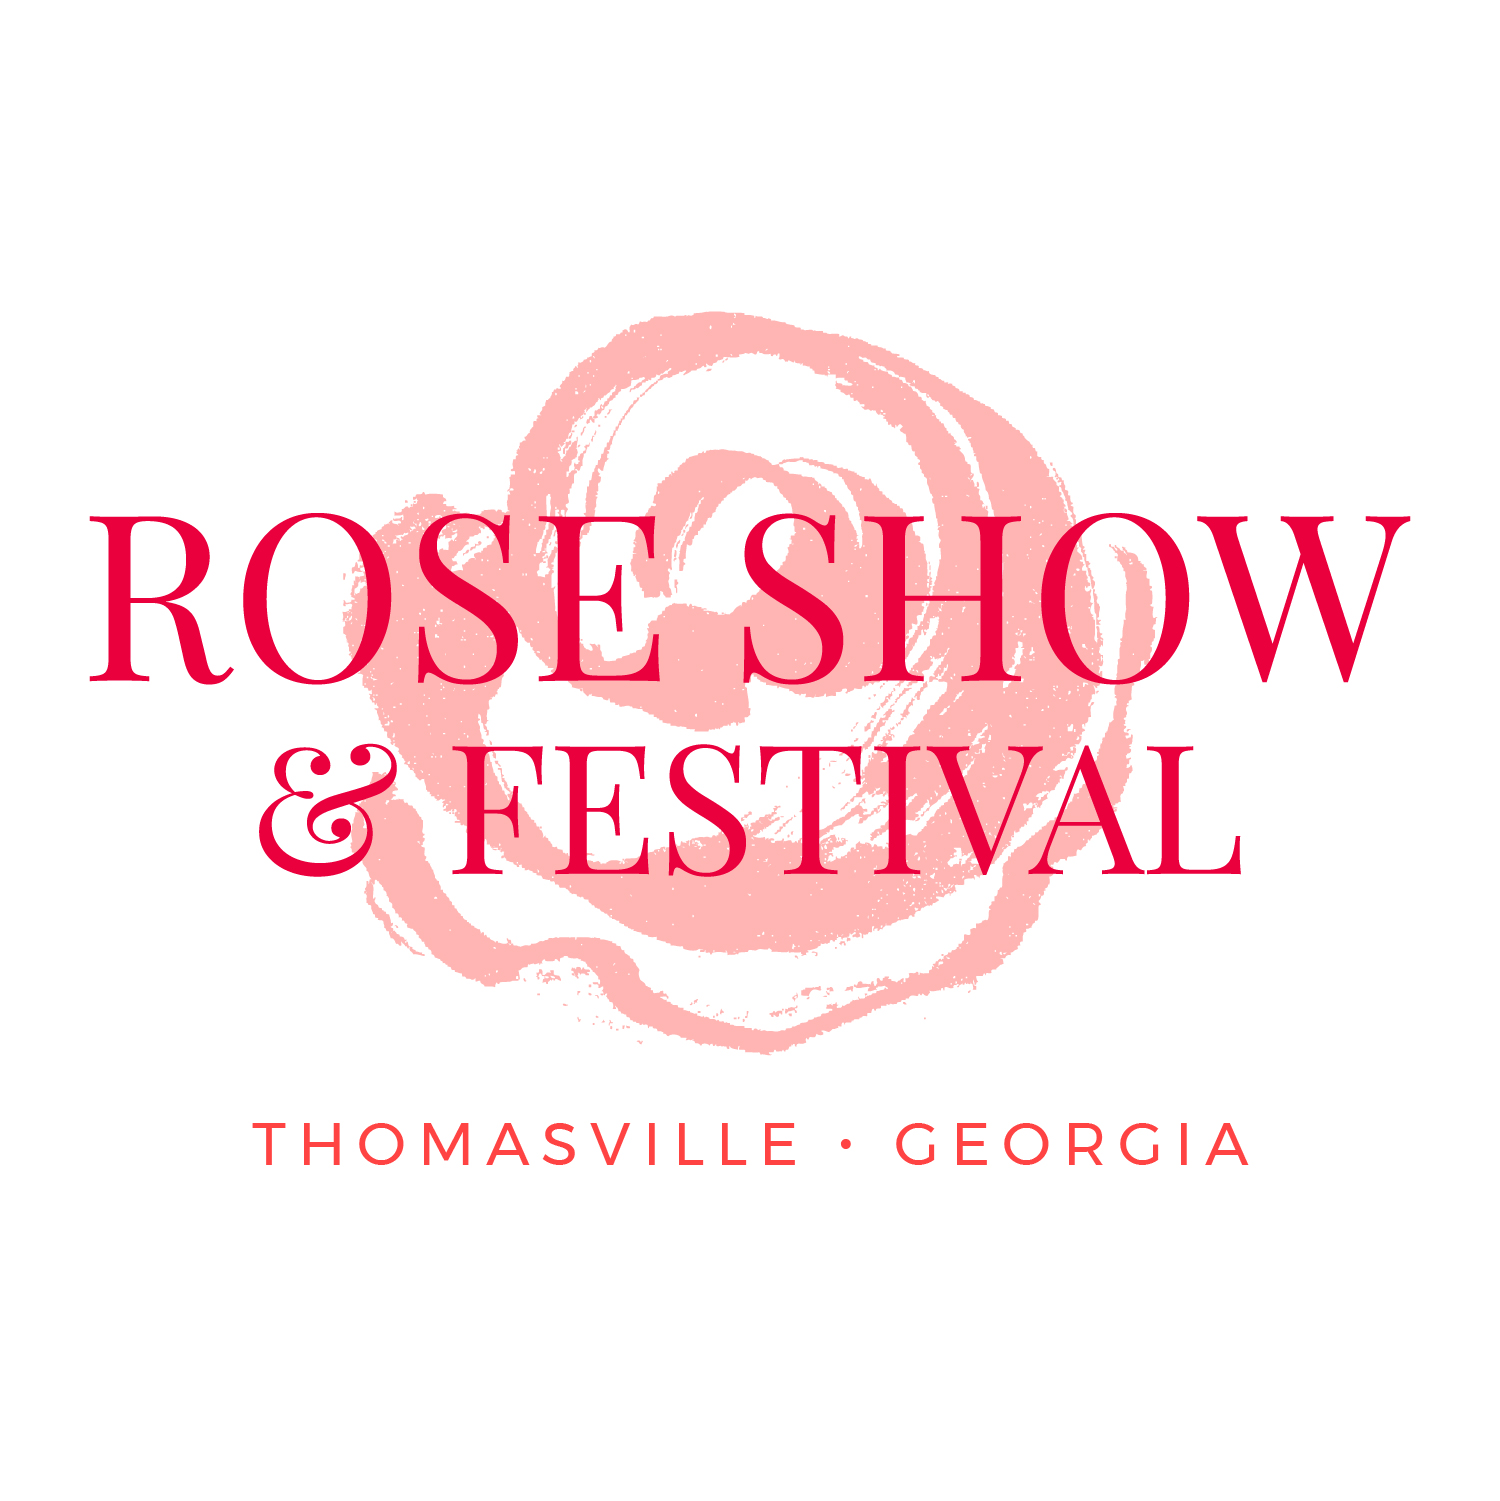 Rose Show & Festival, Thomasville, GA Visitors Center and Main Street